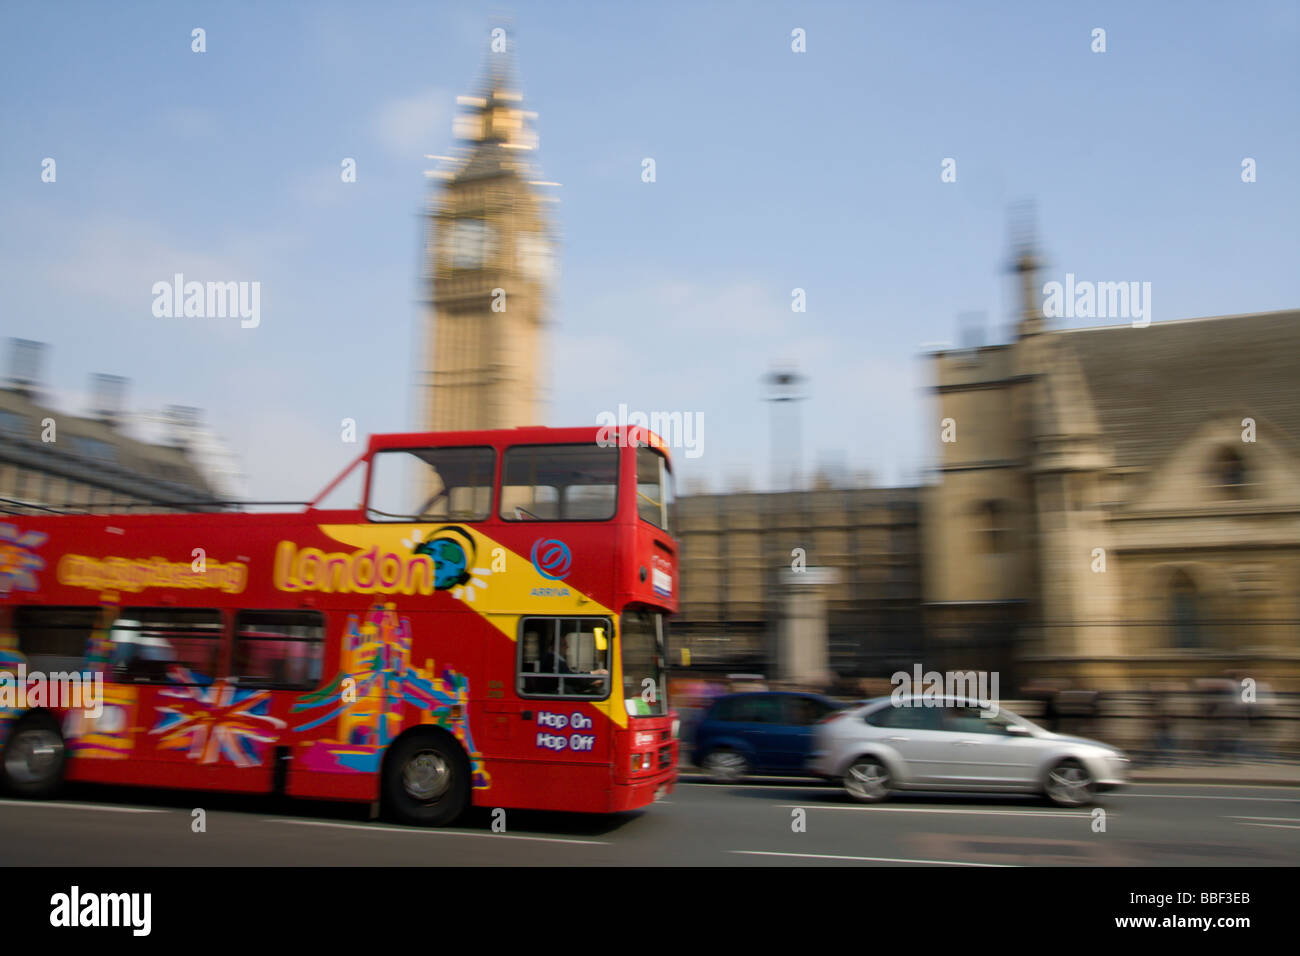 London sightseeing bus Stock Photo